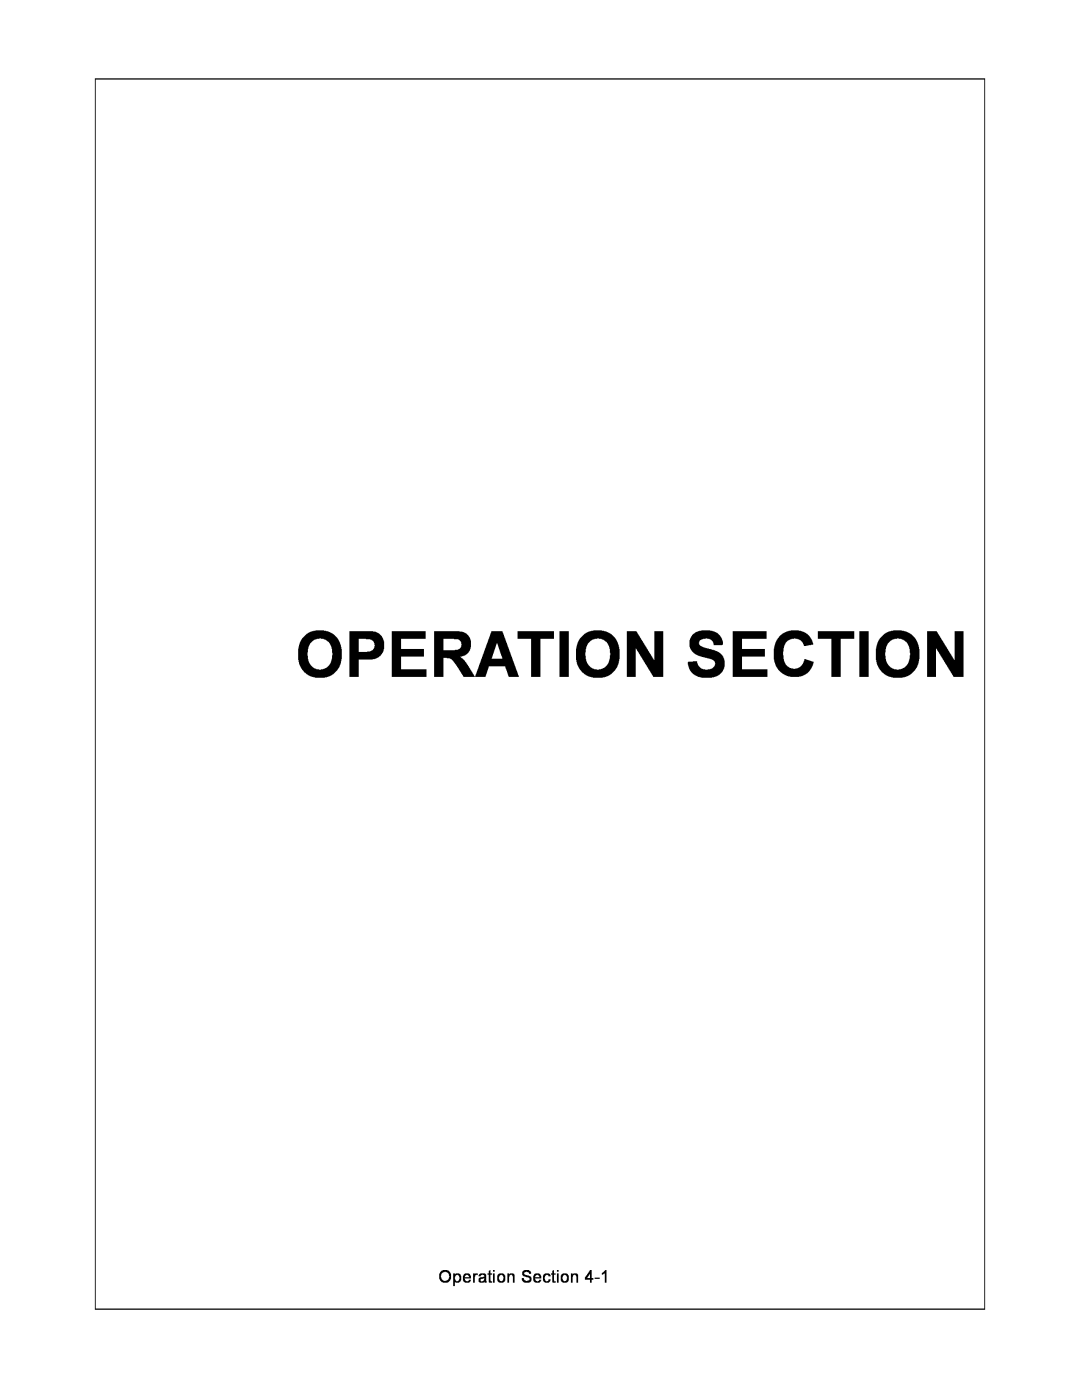 Alamo 1595 manual Operation Section 